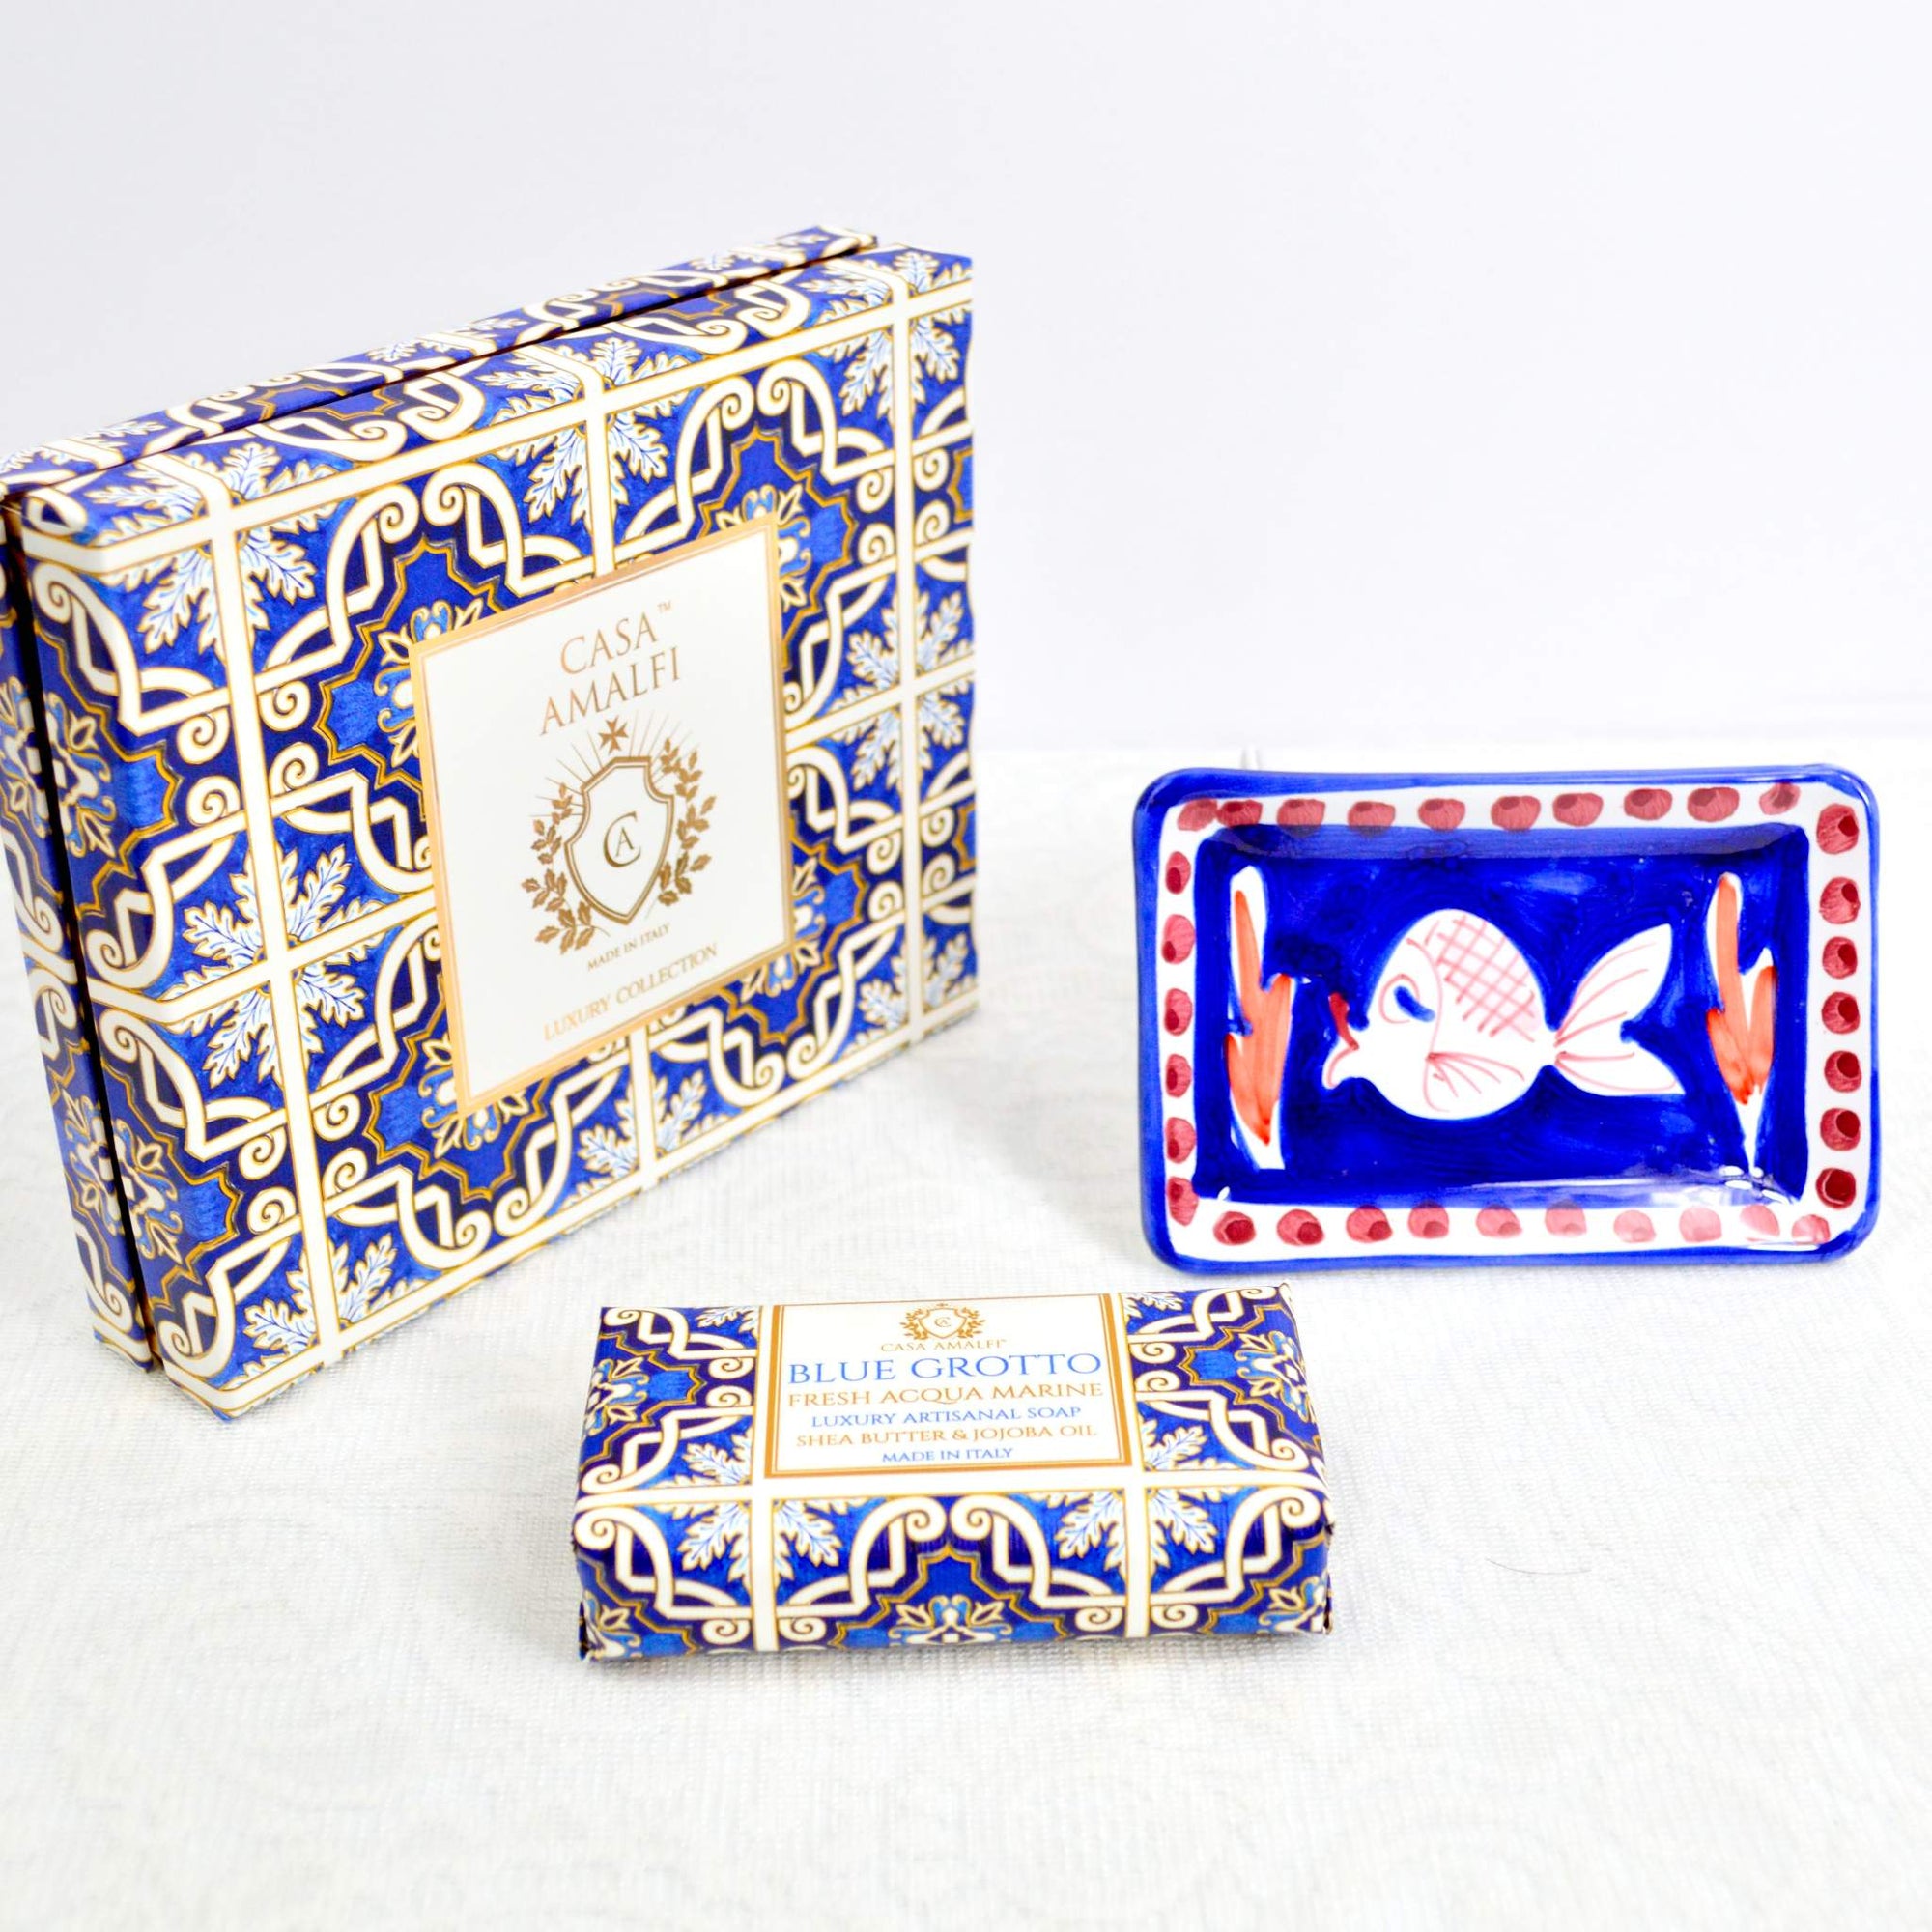 Soap and Ceramic Dish Set - Cobalt Blue, Fish - Made in Italy - My Italian Decor